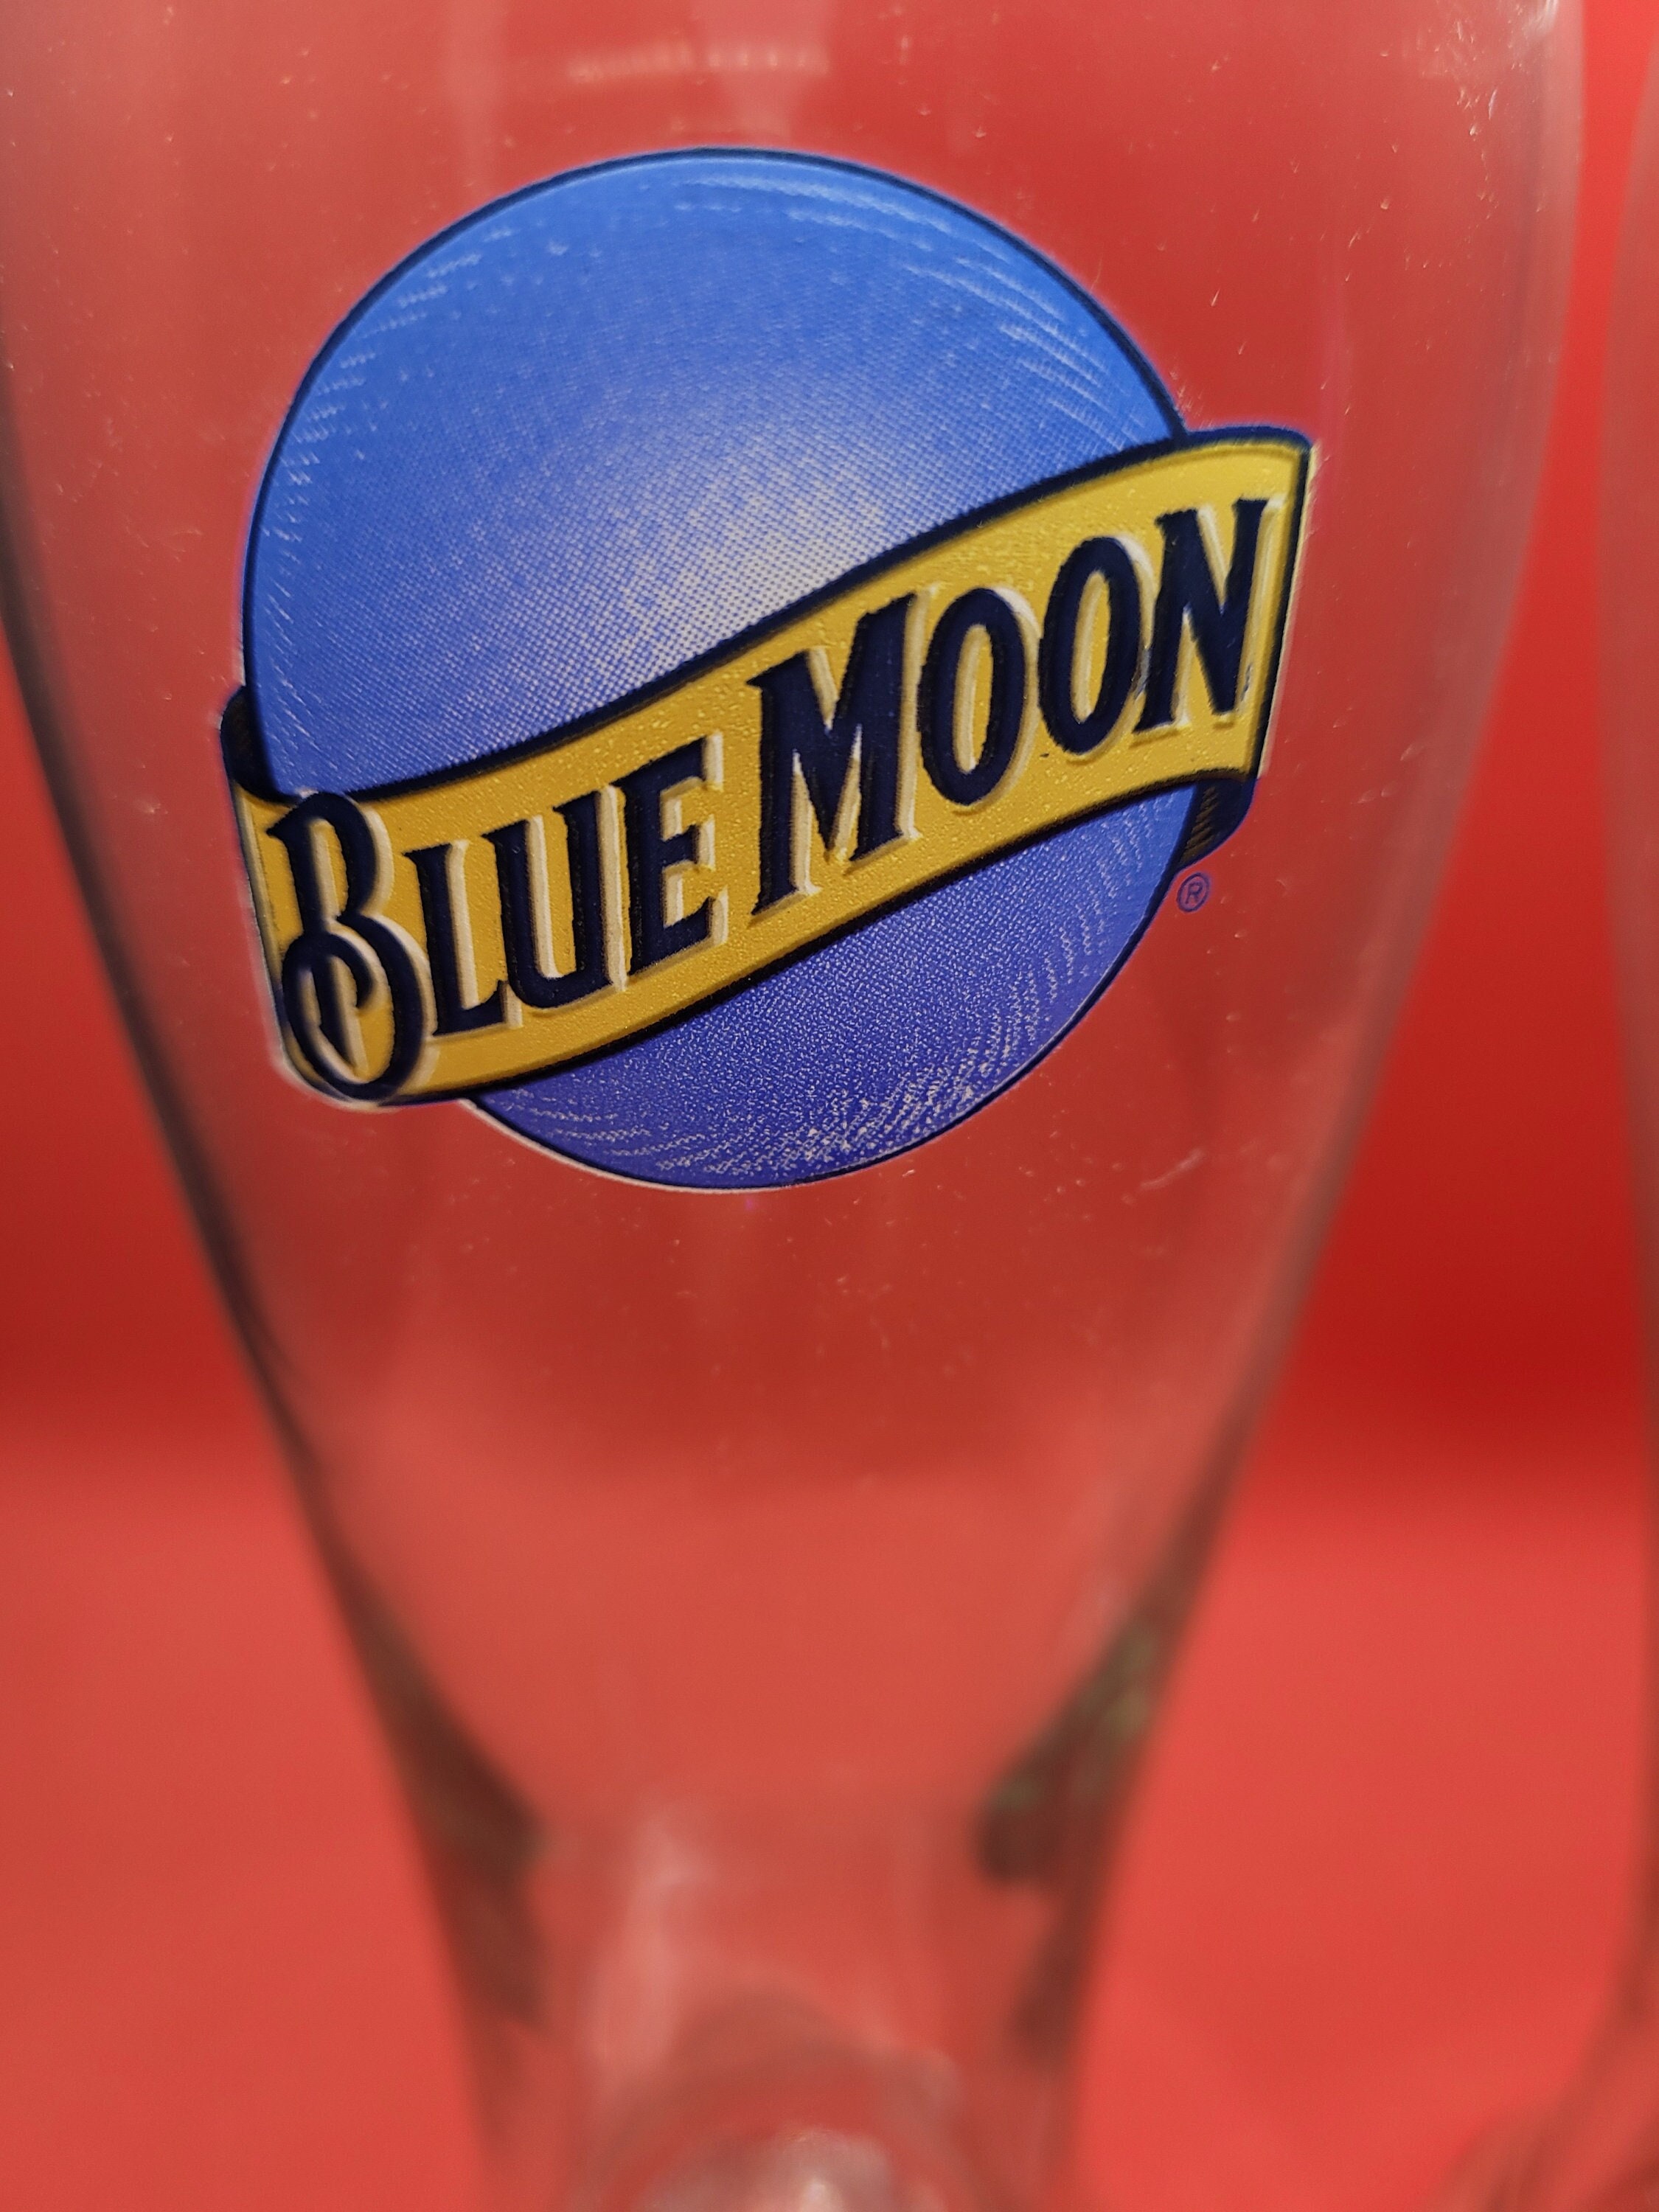 Blue Moon 12 oz, tall Beer Glass